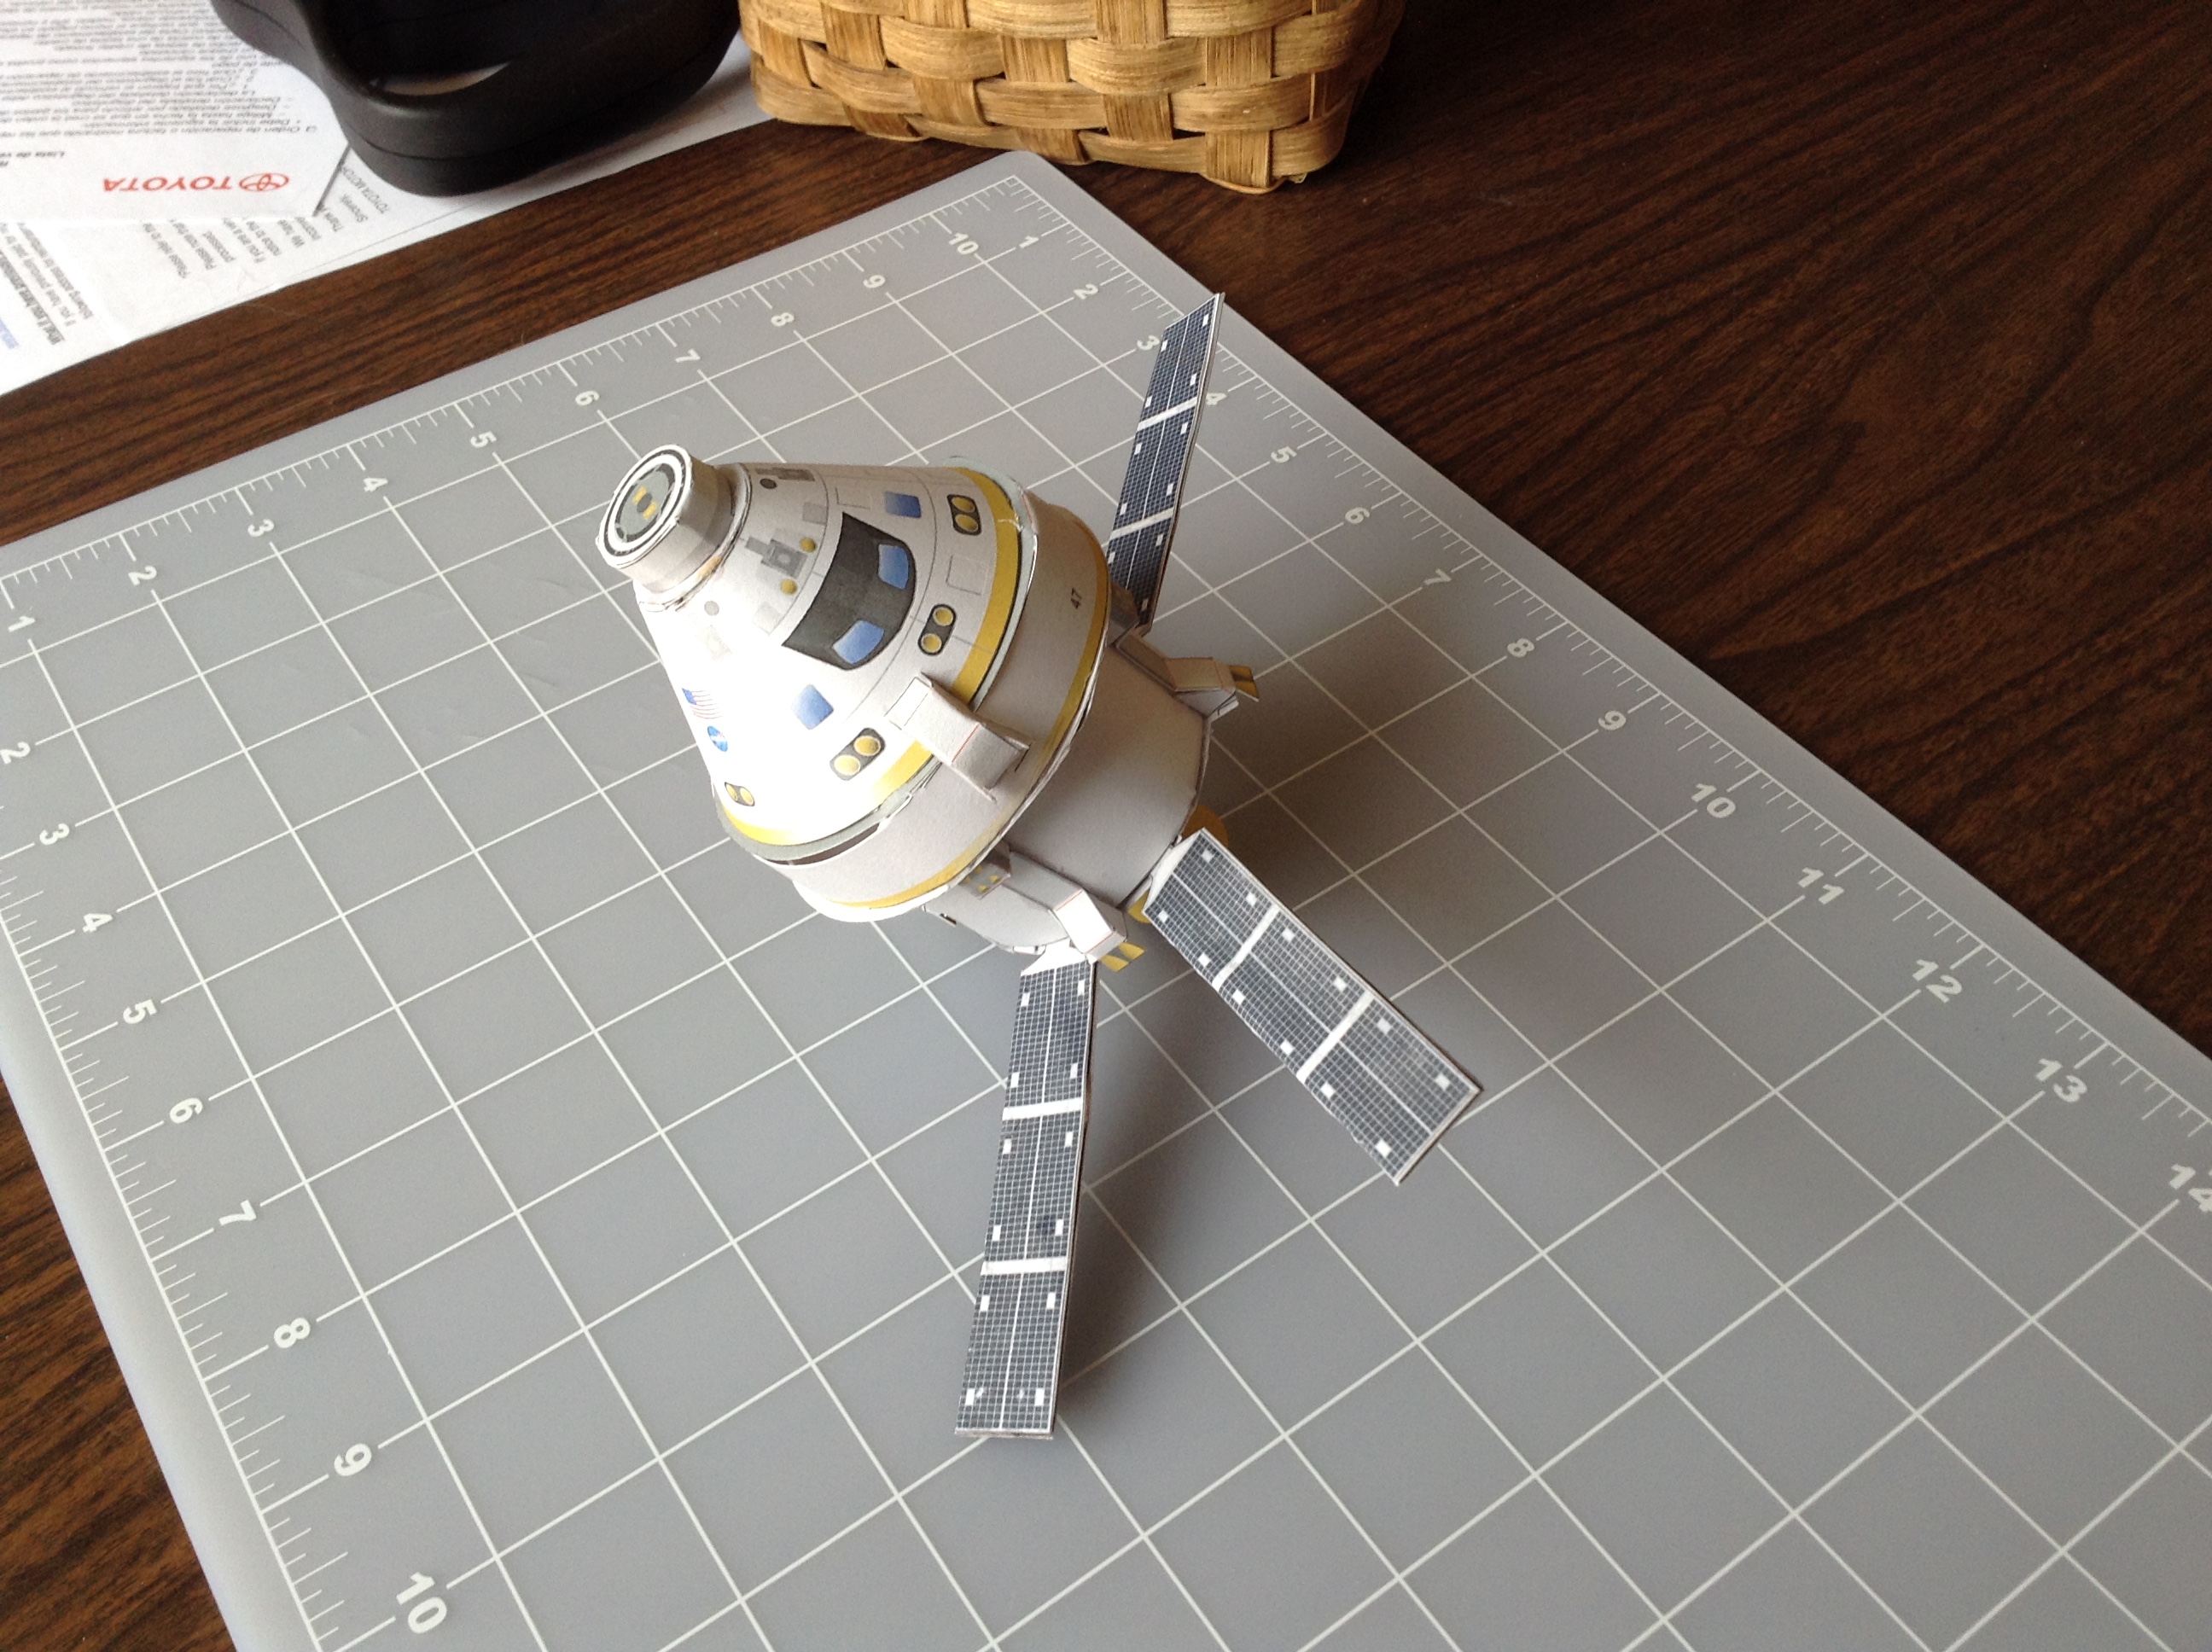 Orion paper model